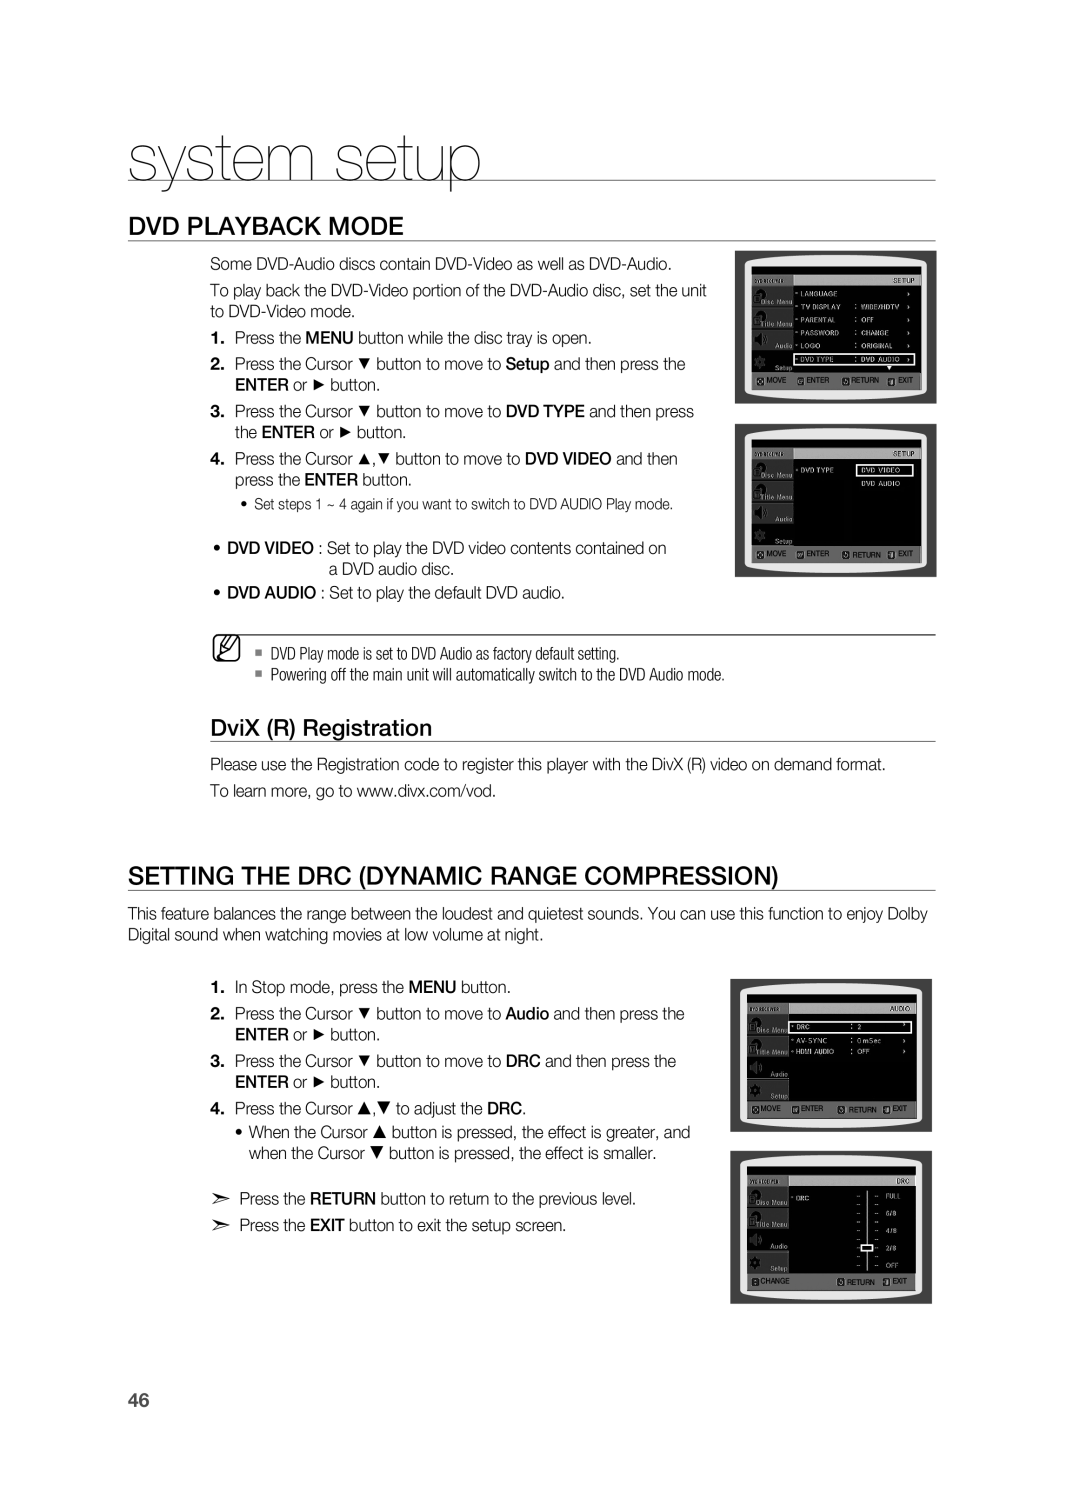 Samsung HT-X710 user manual DVD Playback Mode, Setting the DRC Dynamic Range Compression, DviX R Registration, system setup 